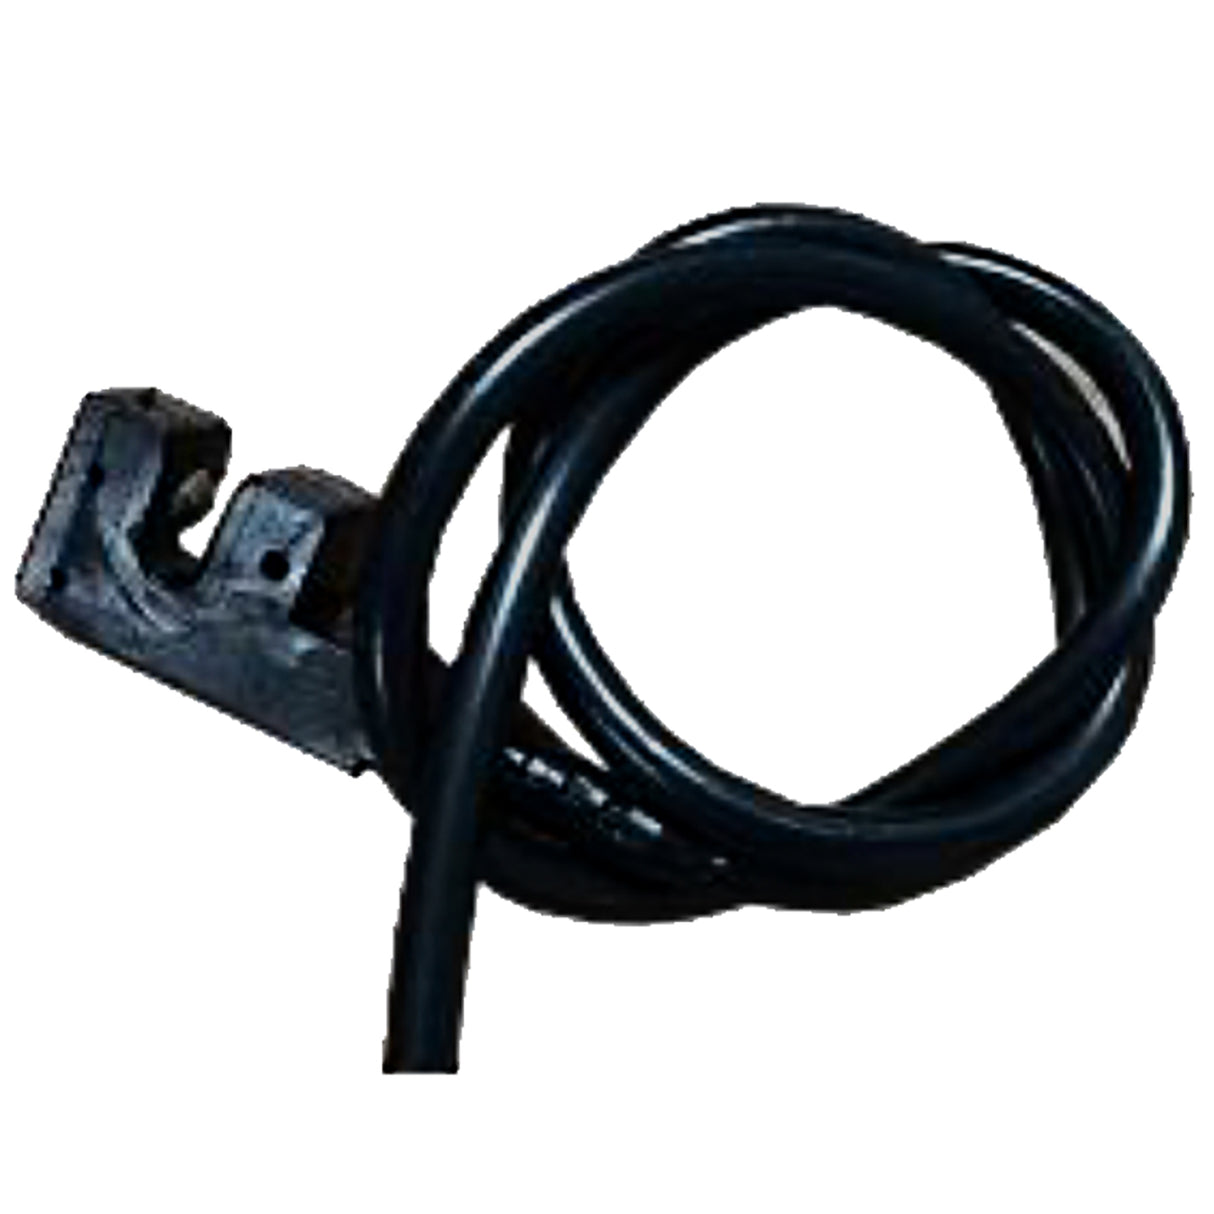 Pulsator Cable (female) DeLaval